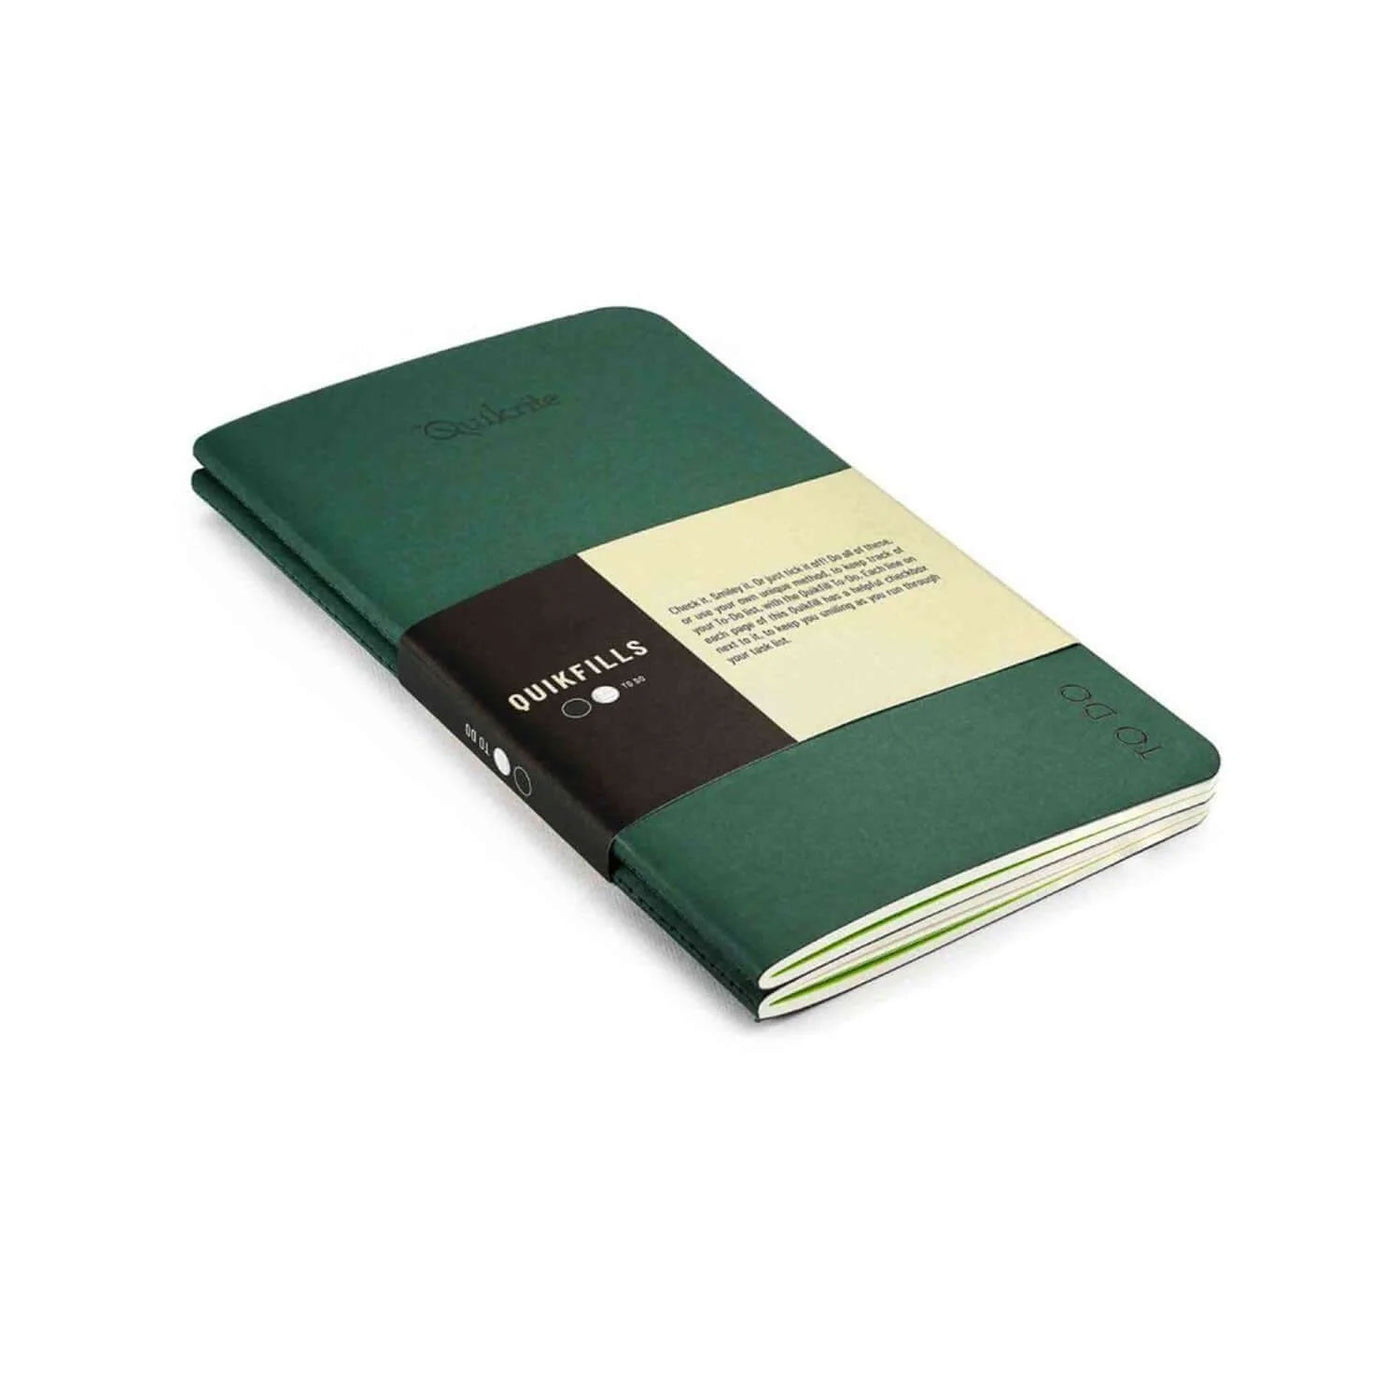 Pennline Quikfill Notebook Refill For Quikrite, Green - Set Of 2 2